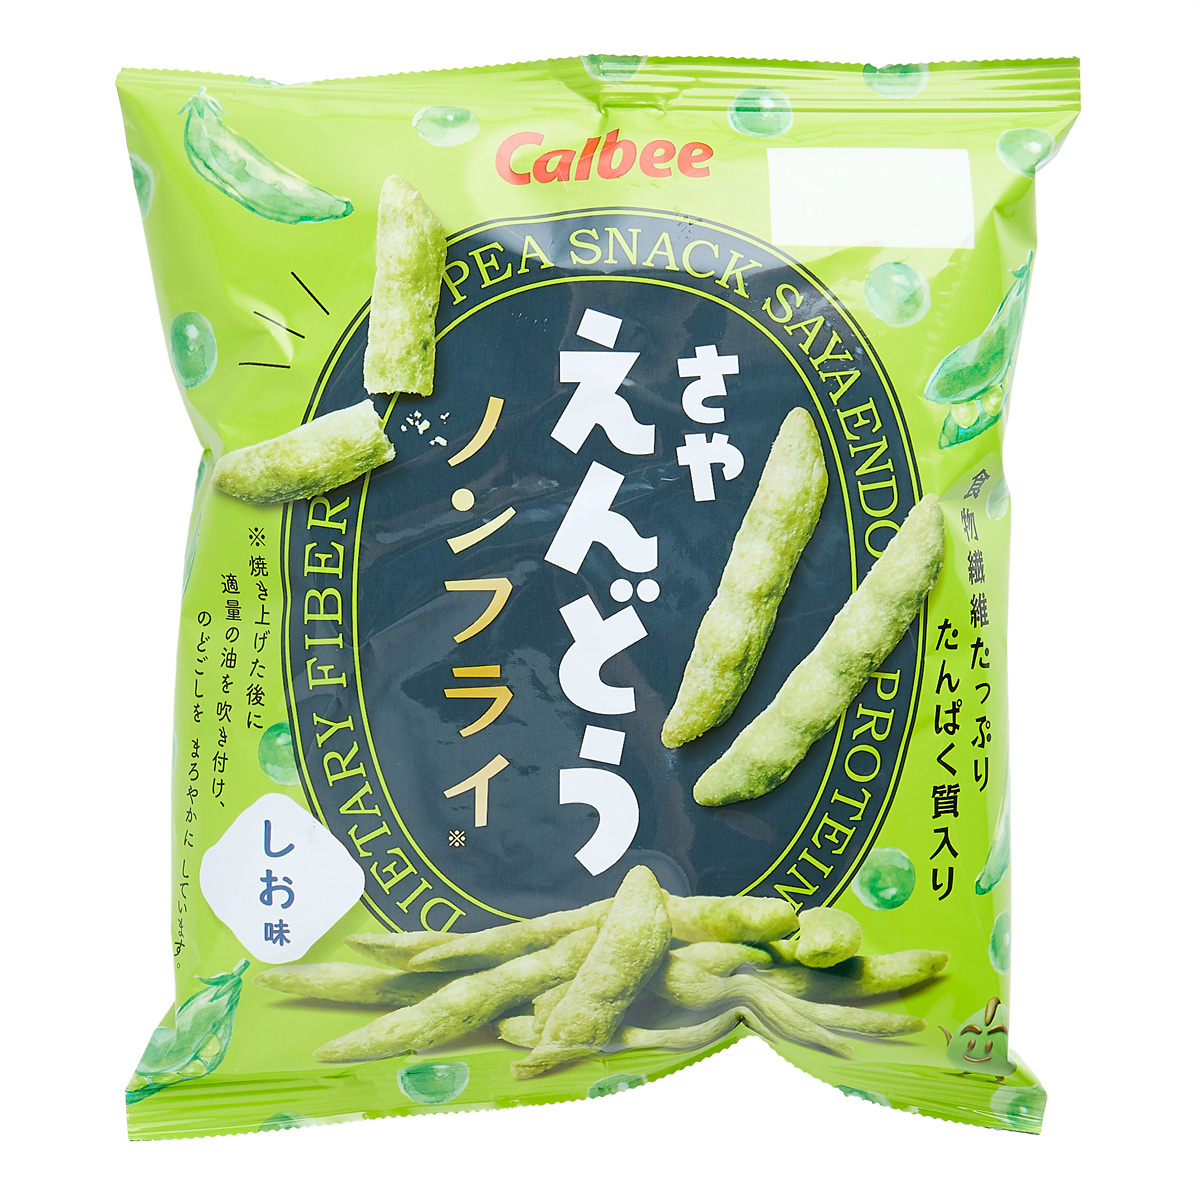 green peas salt flavor